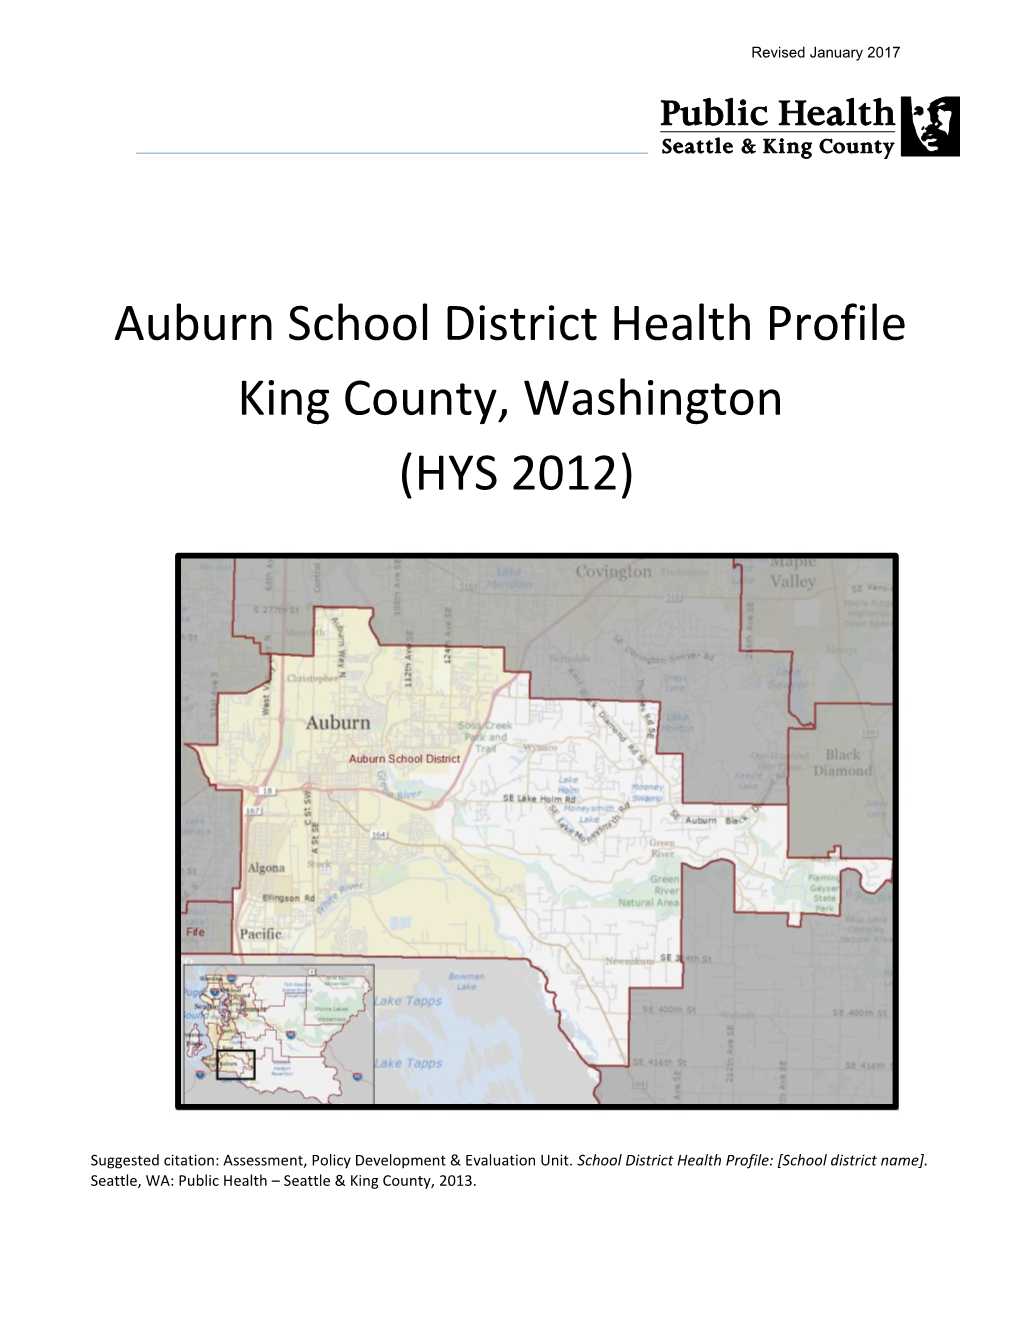 Auburn School District Health Profile King County, Washington (HYS 2012)